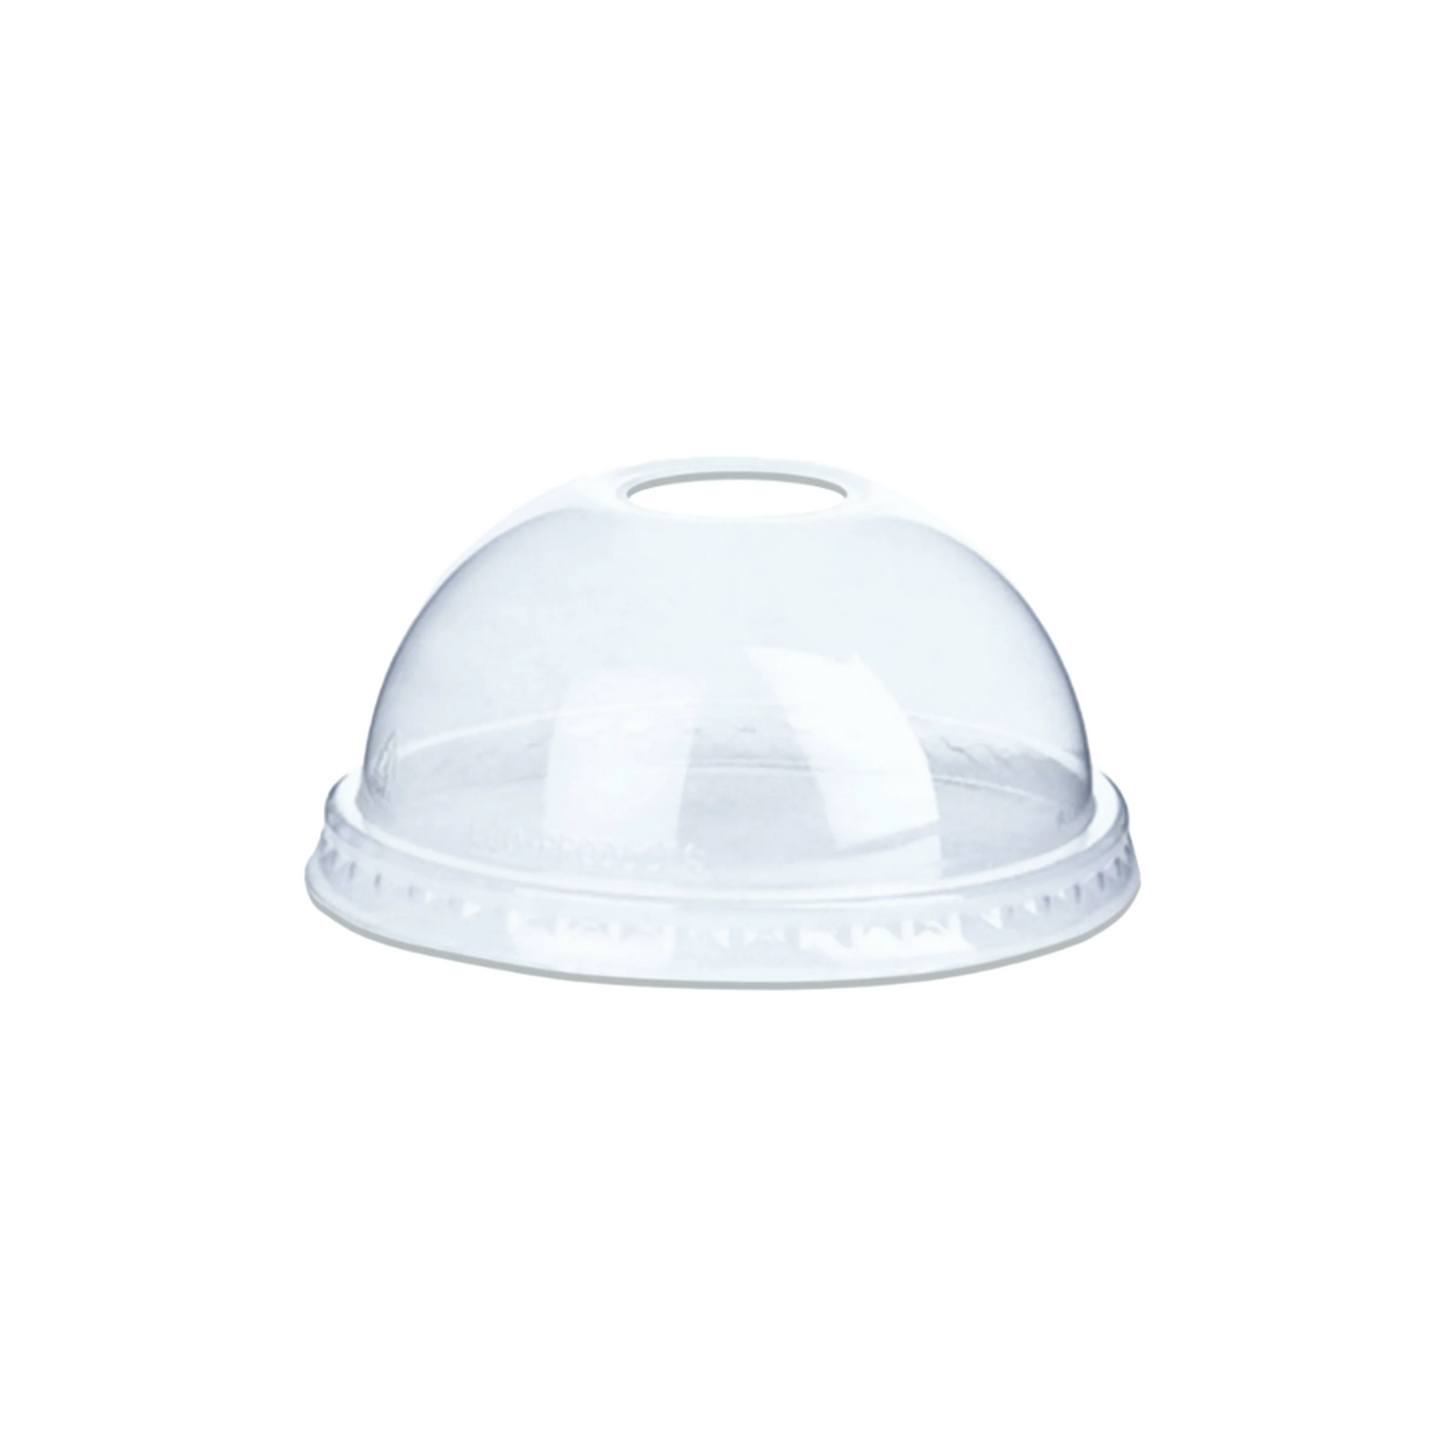 Kreme City Disposable PP Plastic Dome Lid Clear 95mm